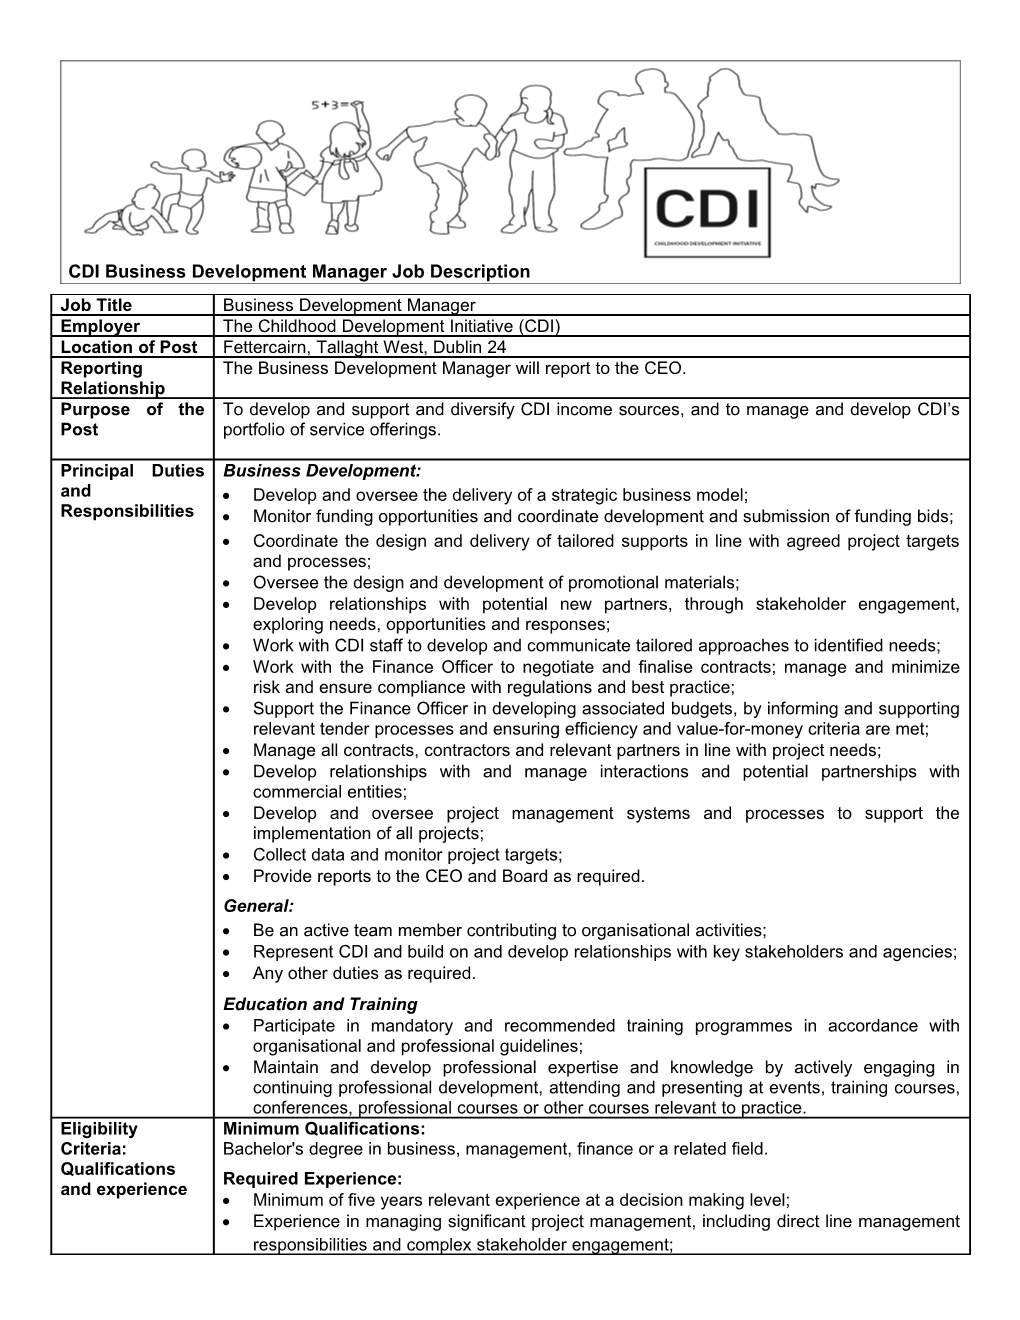 CDI Business Development Manager Job Description